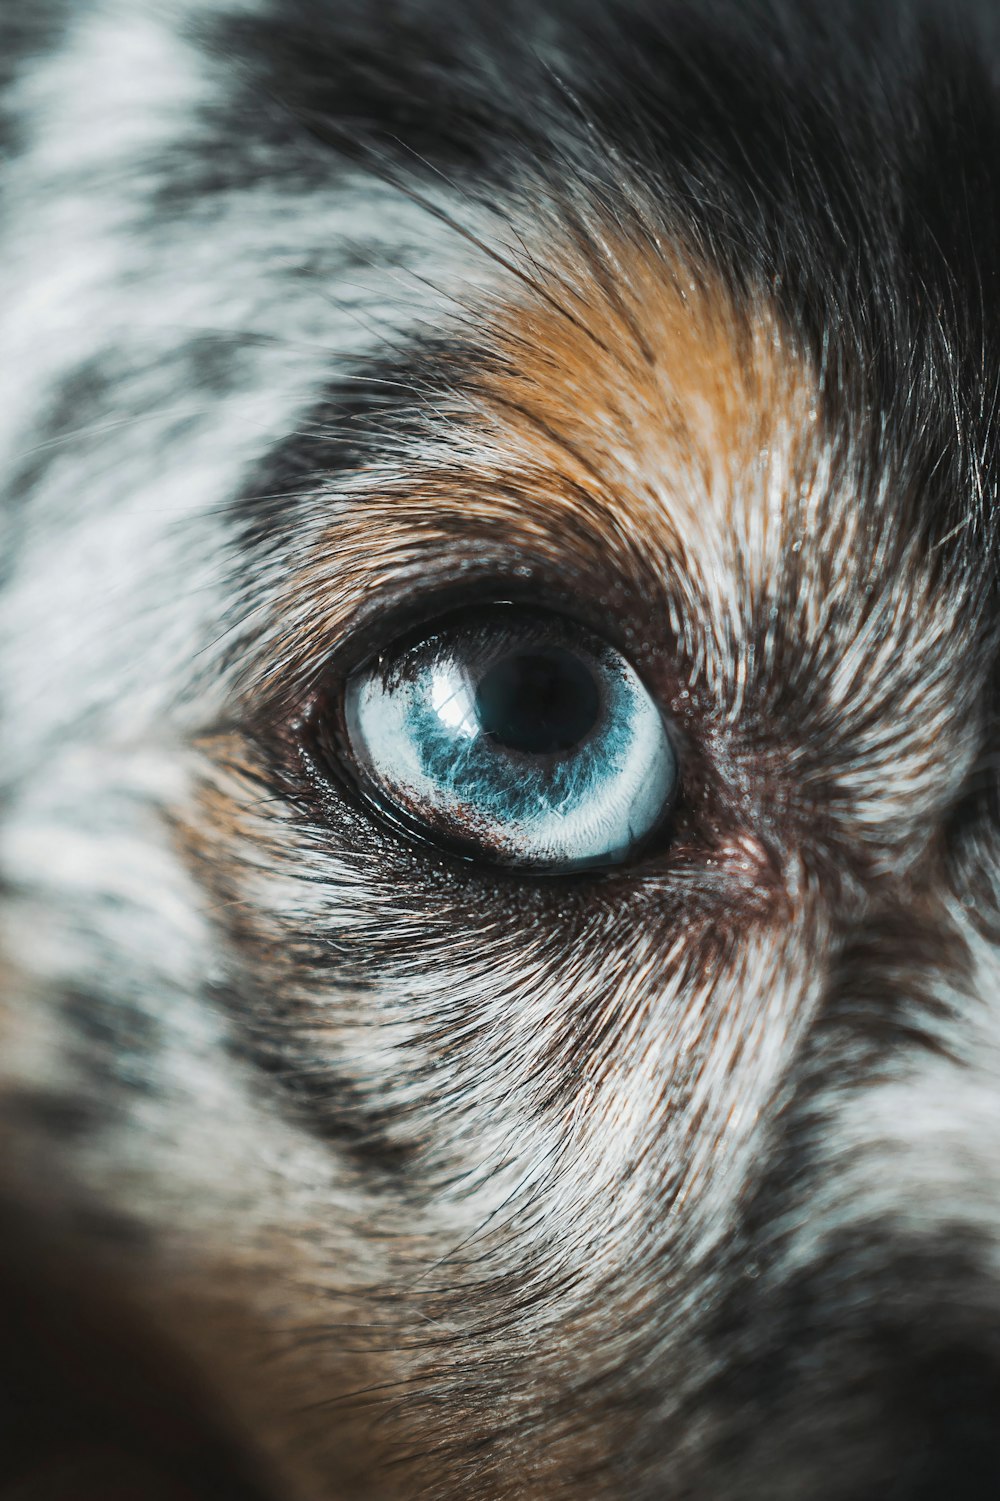 a close up of a dog's blue eye